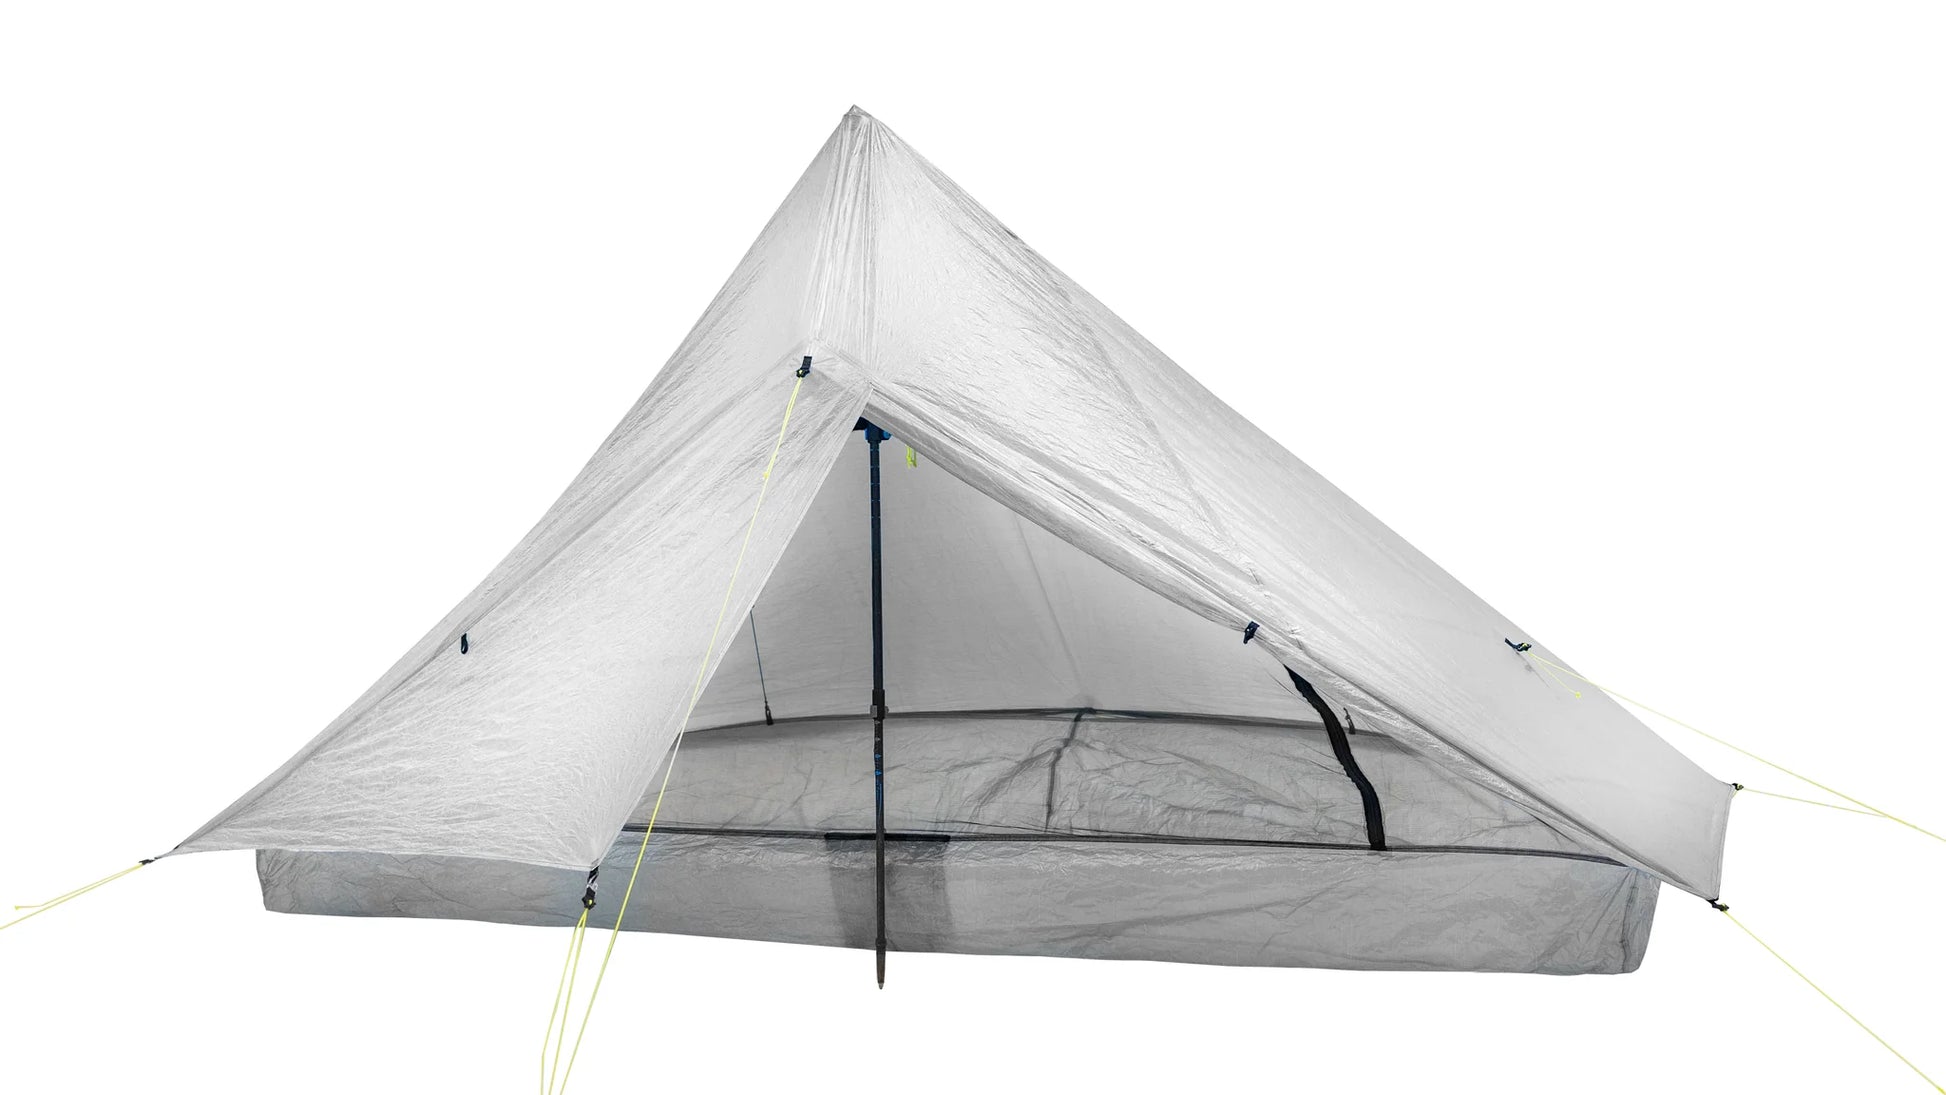 Zpacks - Plex Solo Tent